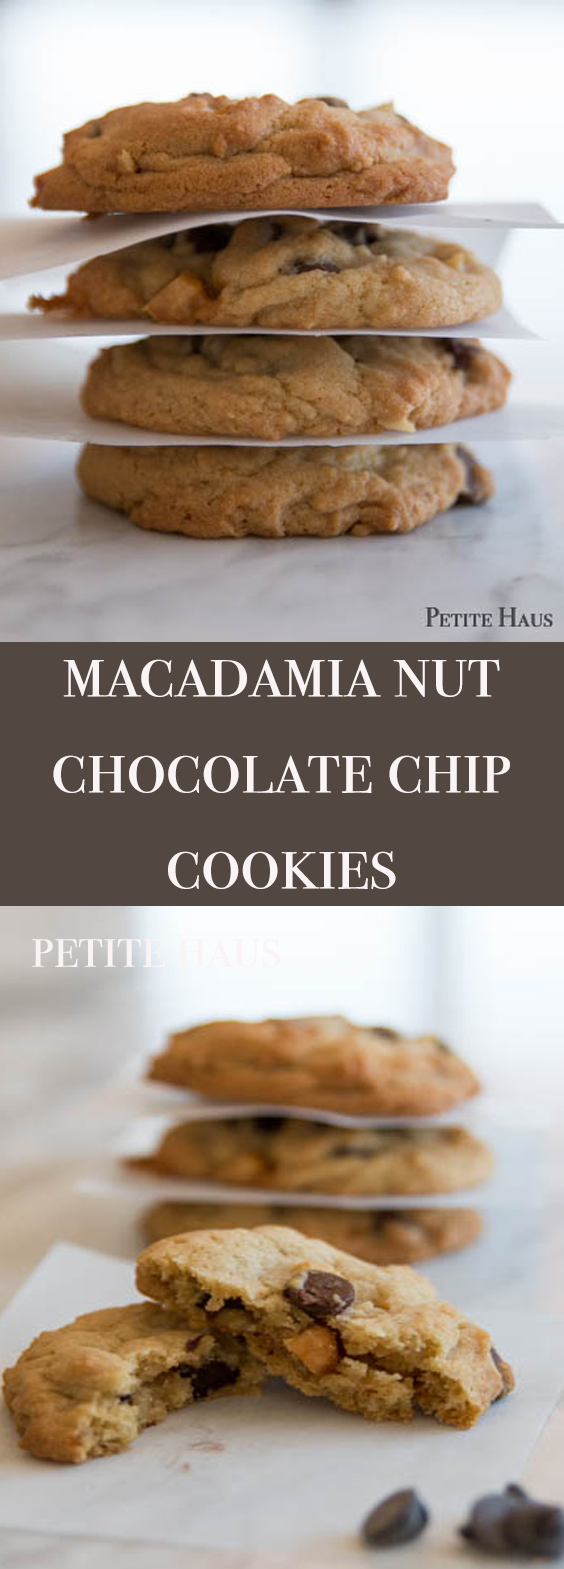 macadamia nut chocolate chip cookies